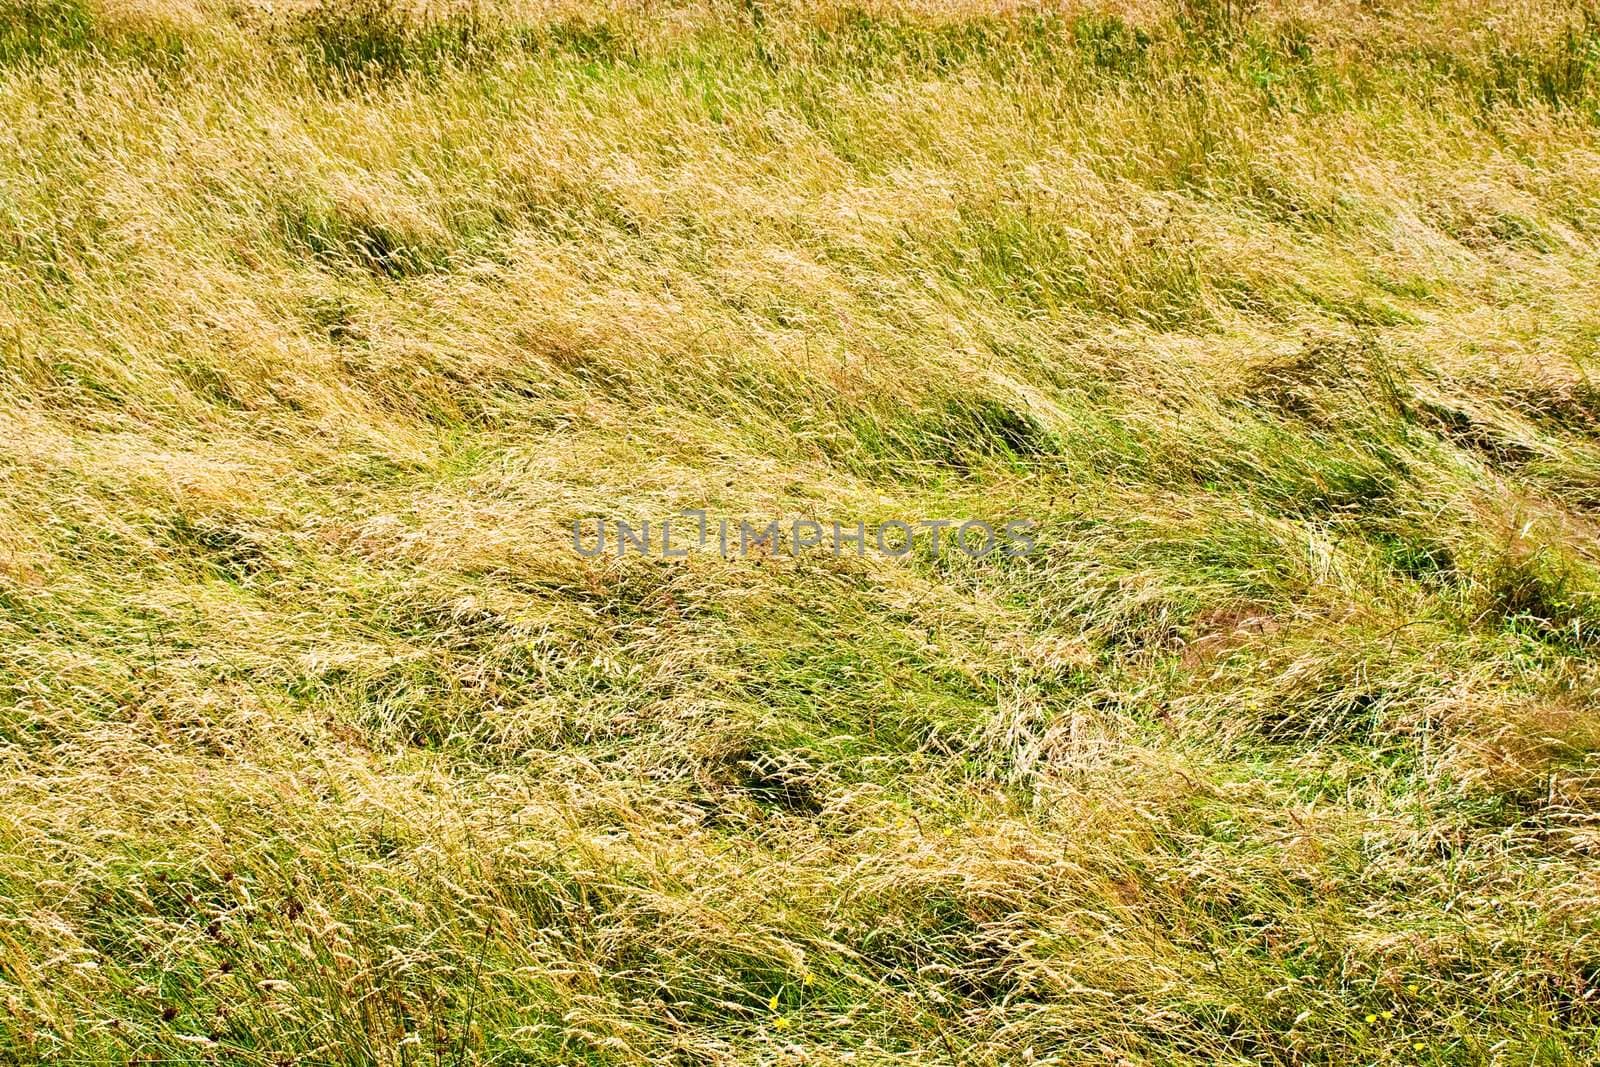 Field of Tall Grass by sbonk